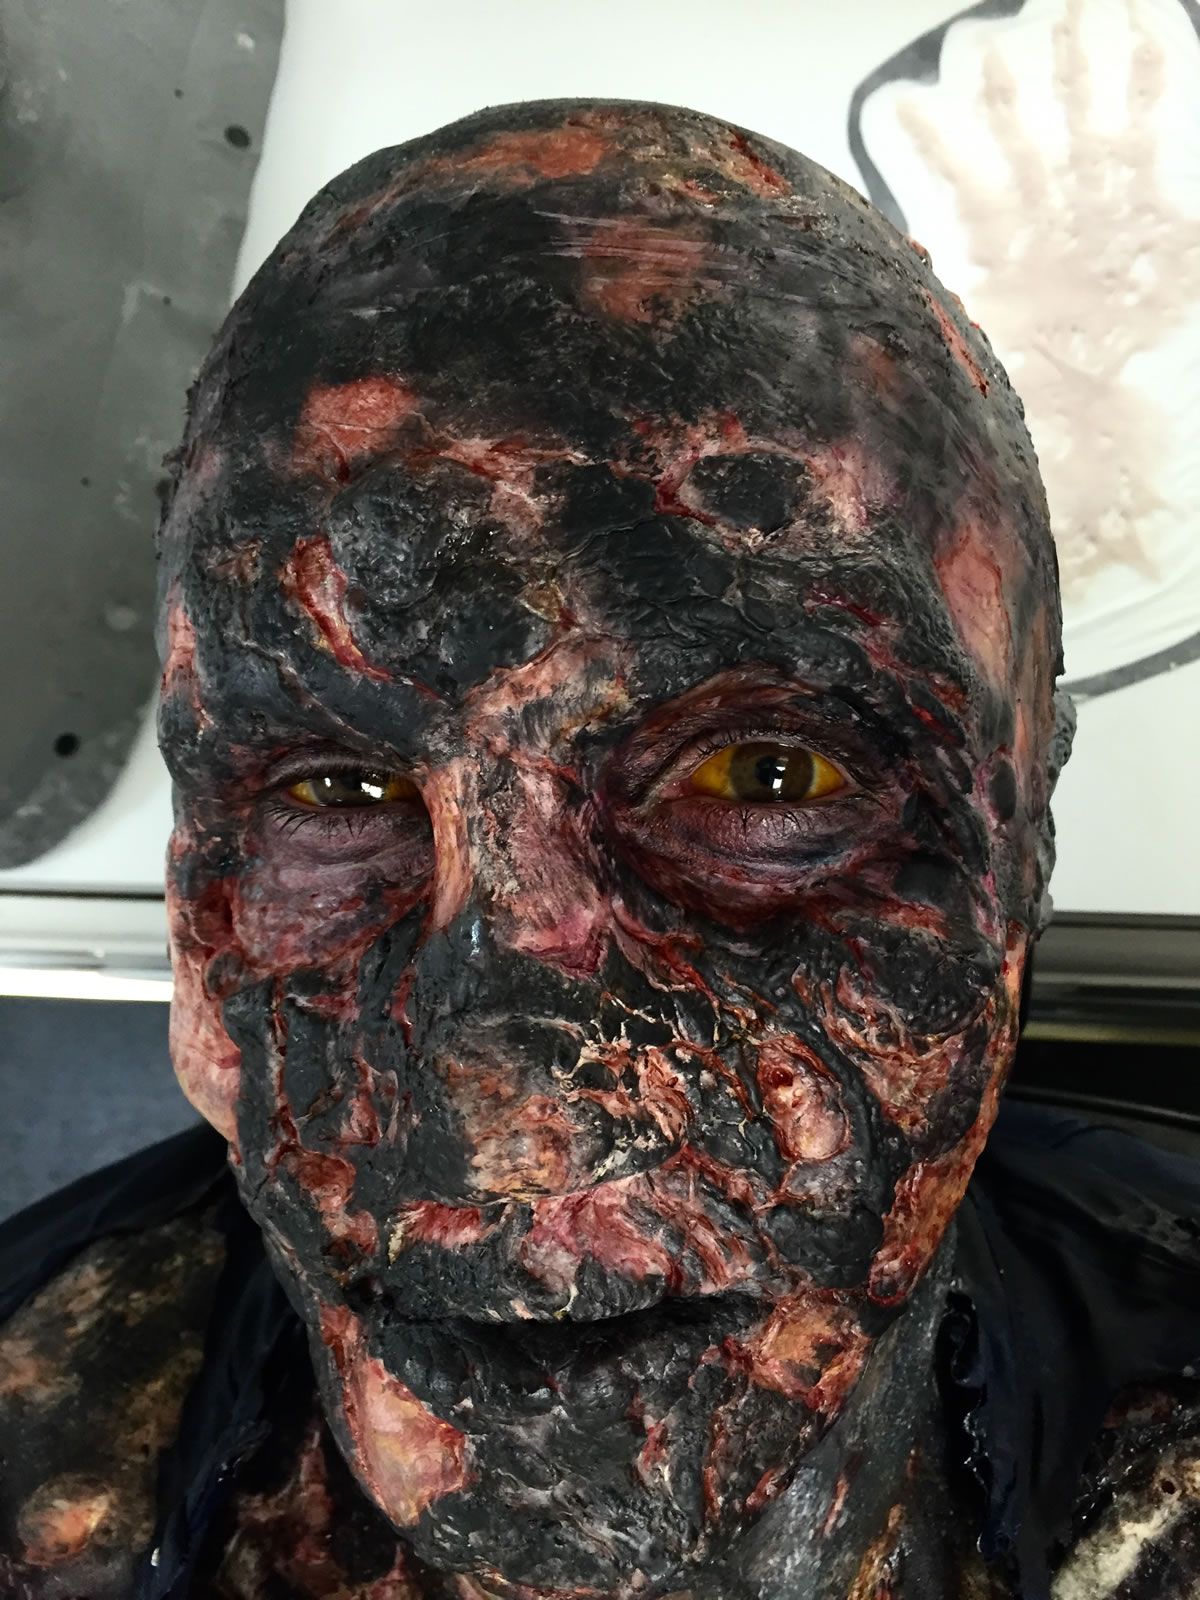 Extreme burned victim for the Fox t.v series 'Bones'